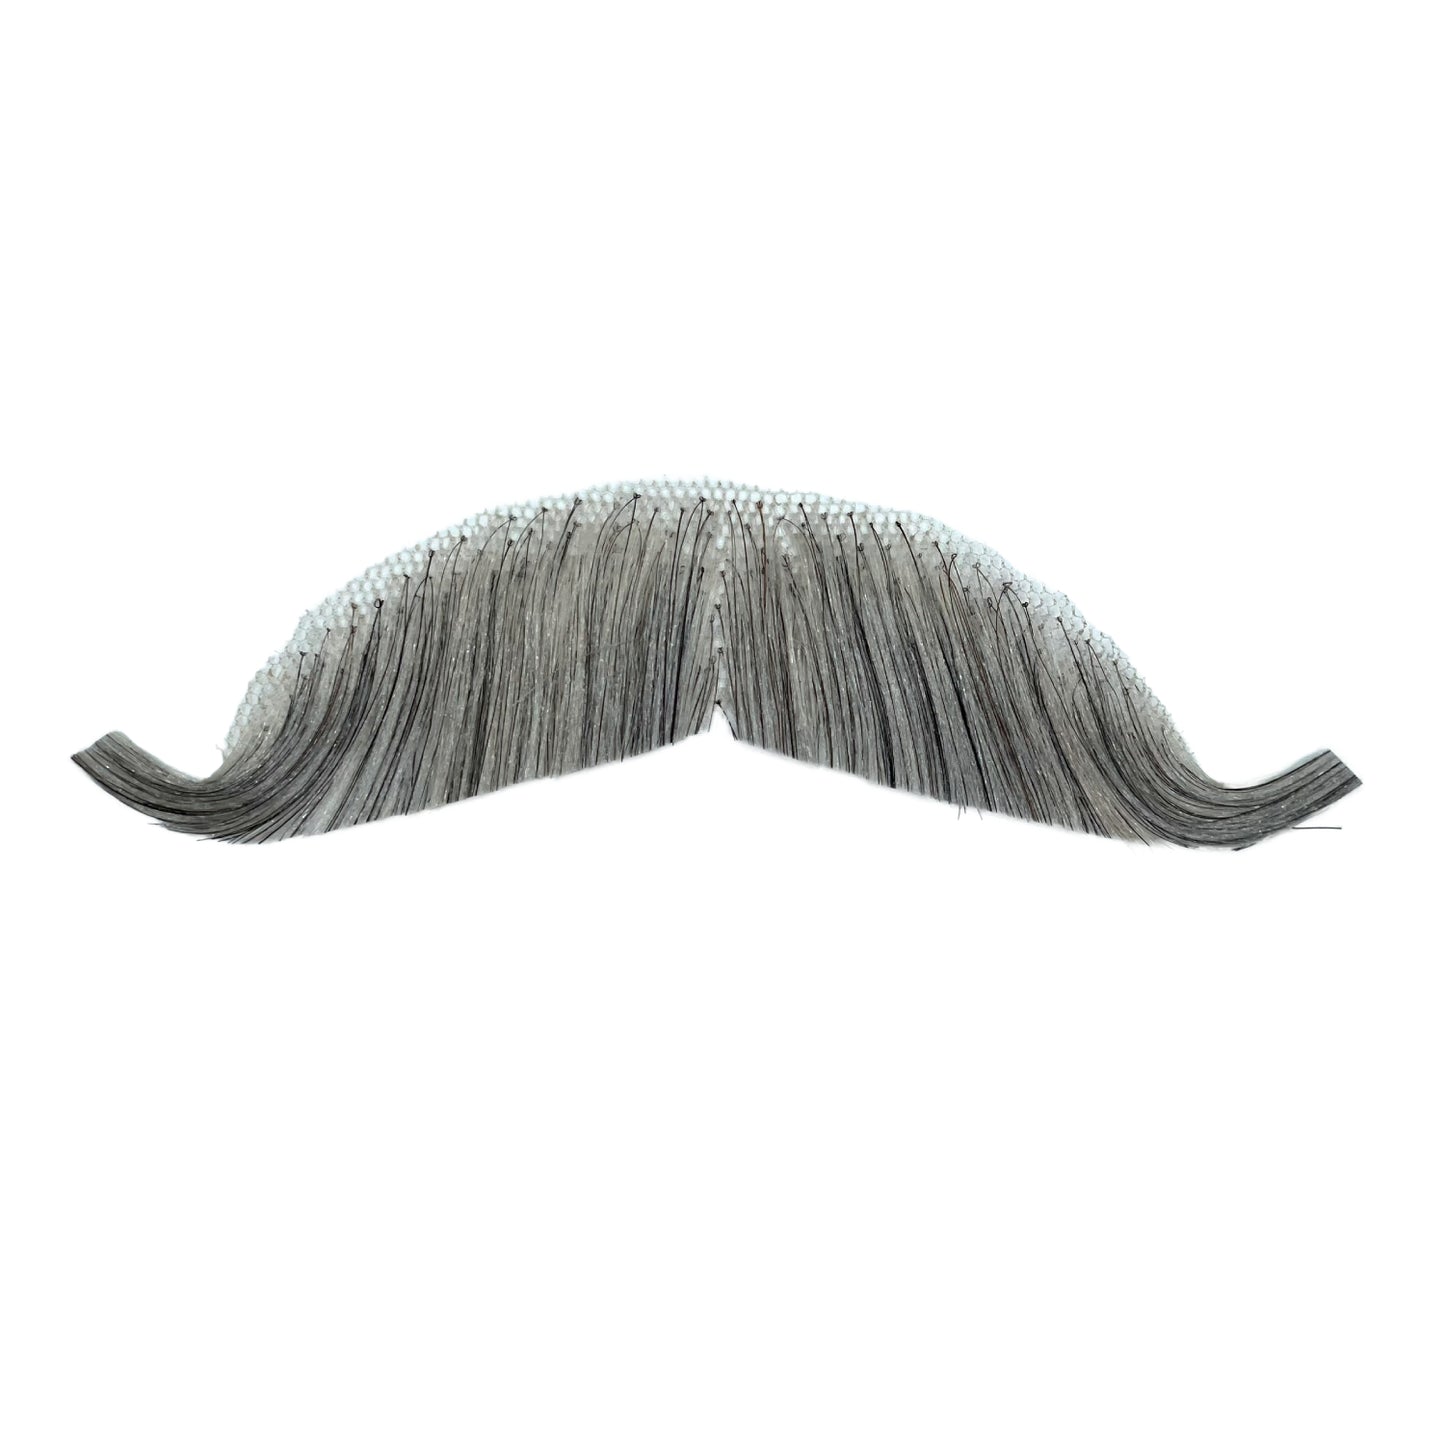 2012 European Moustache